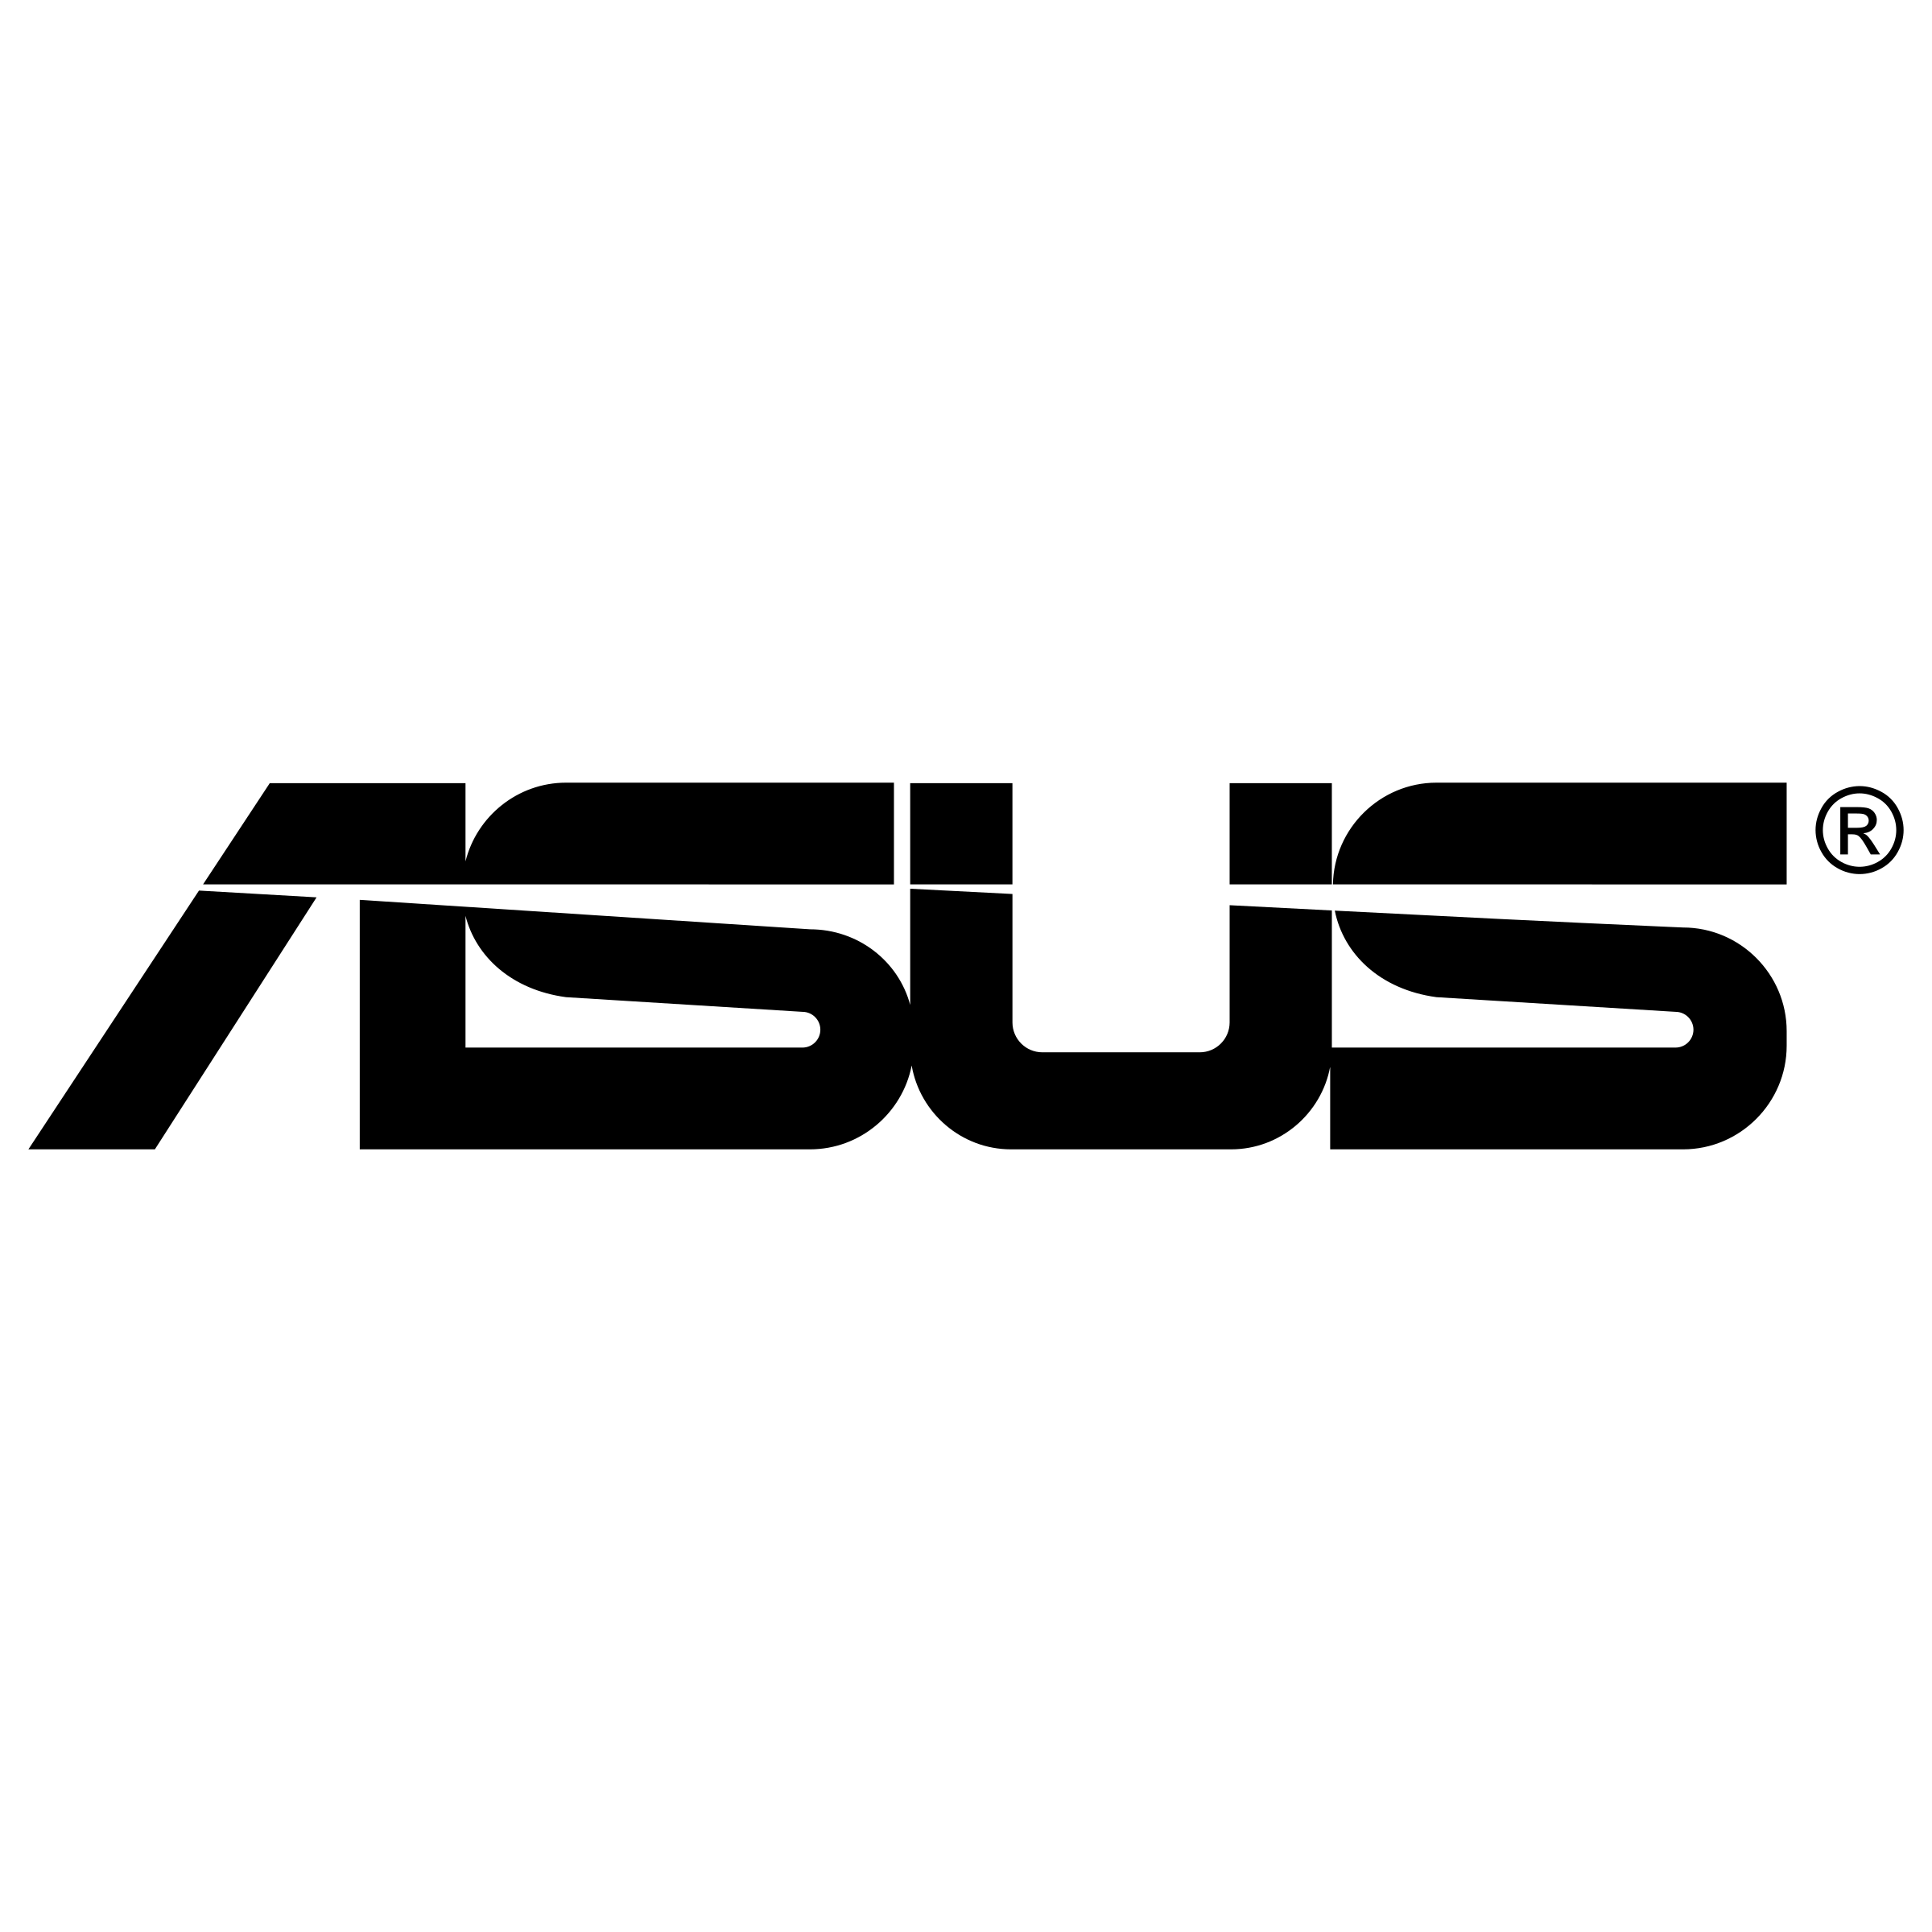 Asus Logo - Asus Logo PNG Transparent & SVG Vector